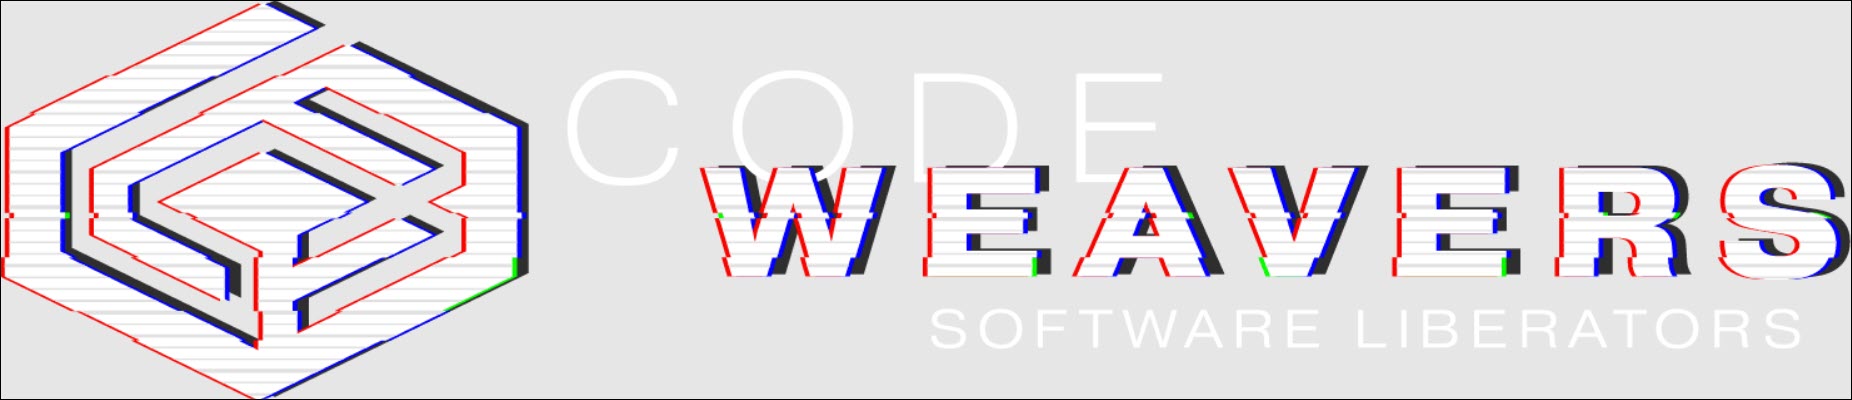 code-weavers